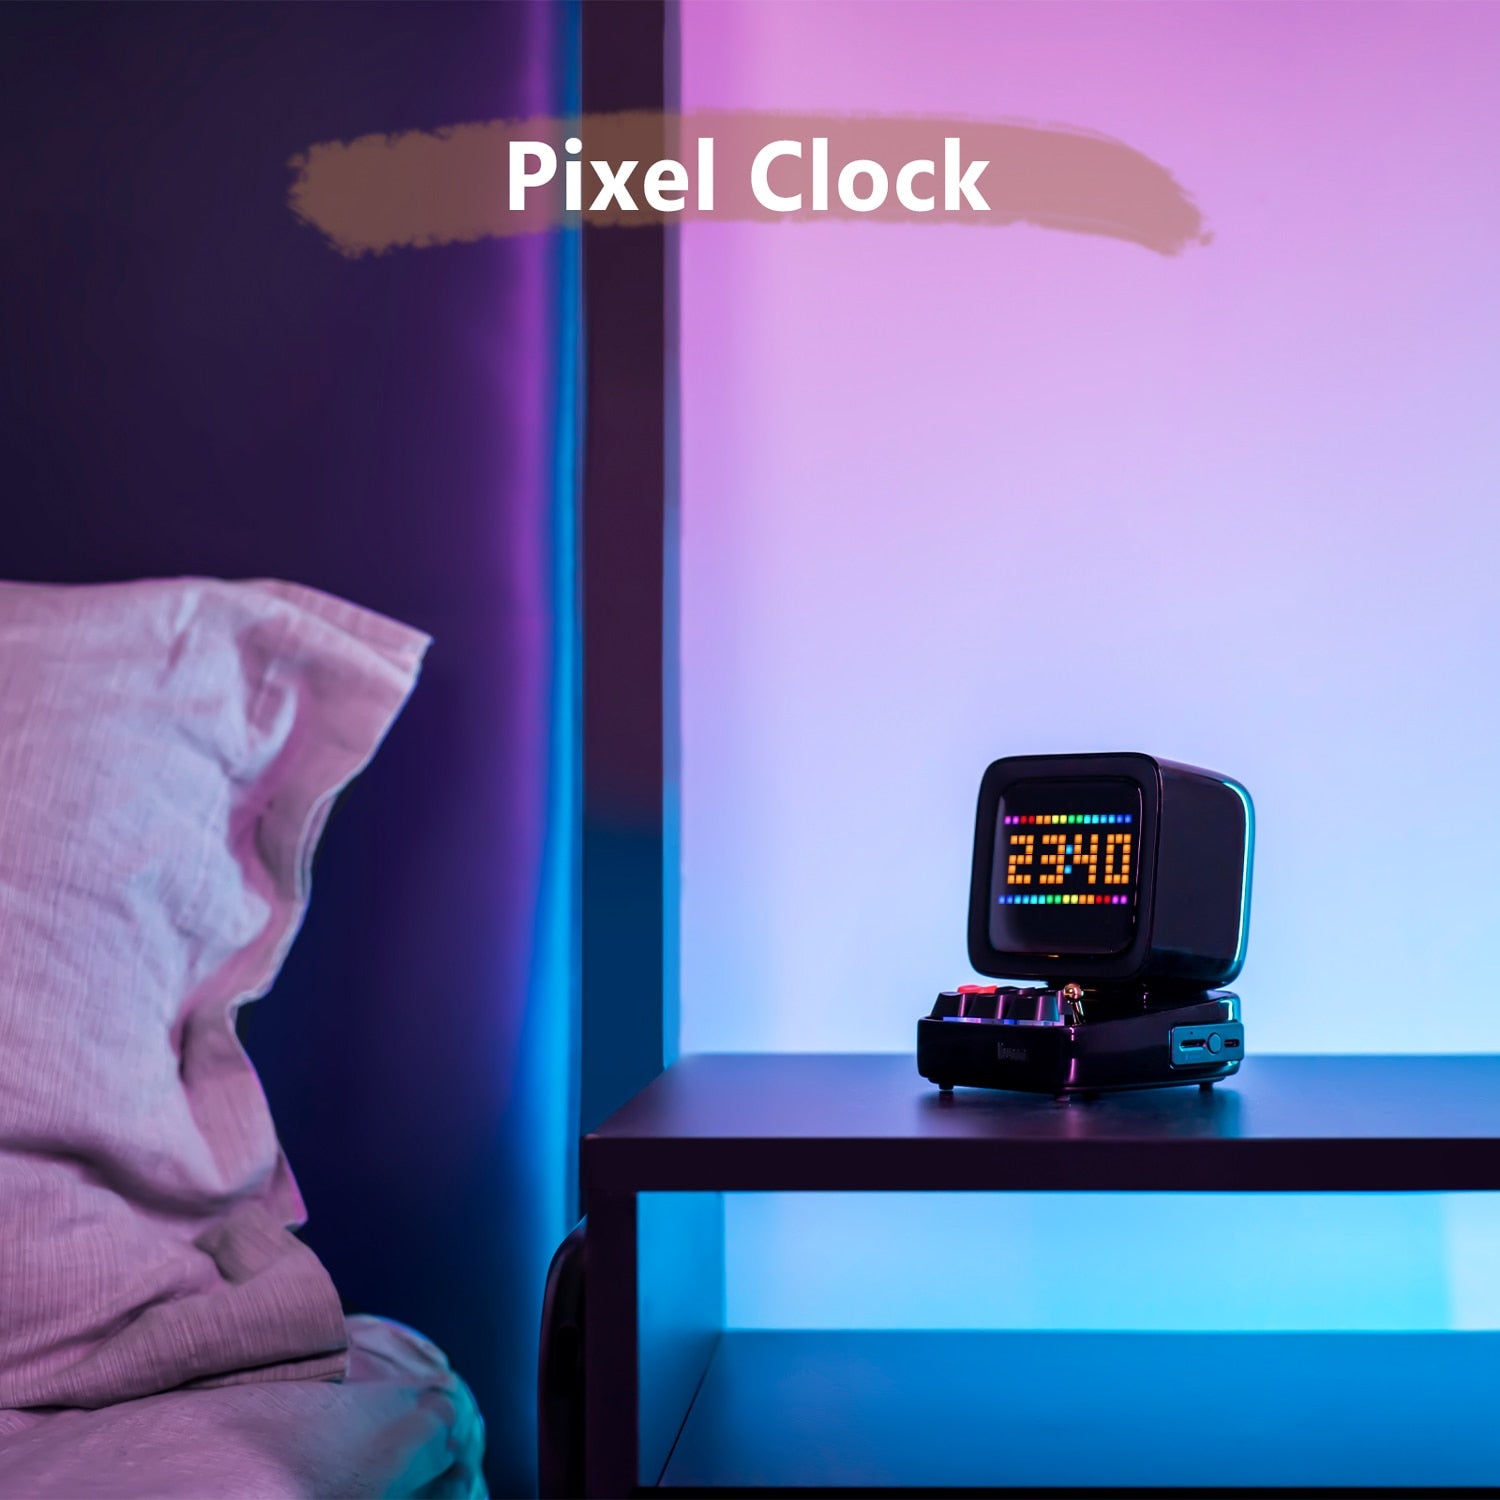 Divoom Ditoo Retro Pixel Art Bluetooth Portable Speaker Alarm Clock DIY LED Display Board, Birthday Gift Home Light Decoration